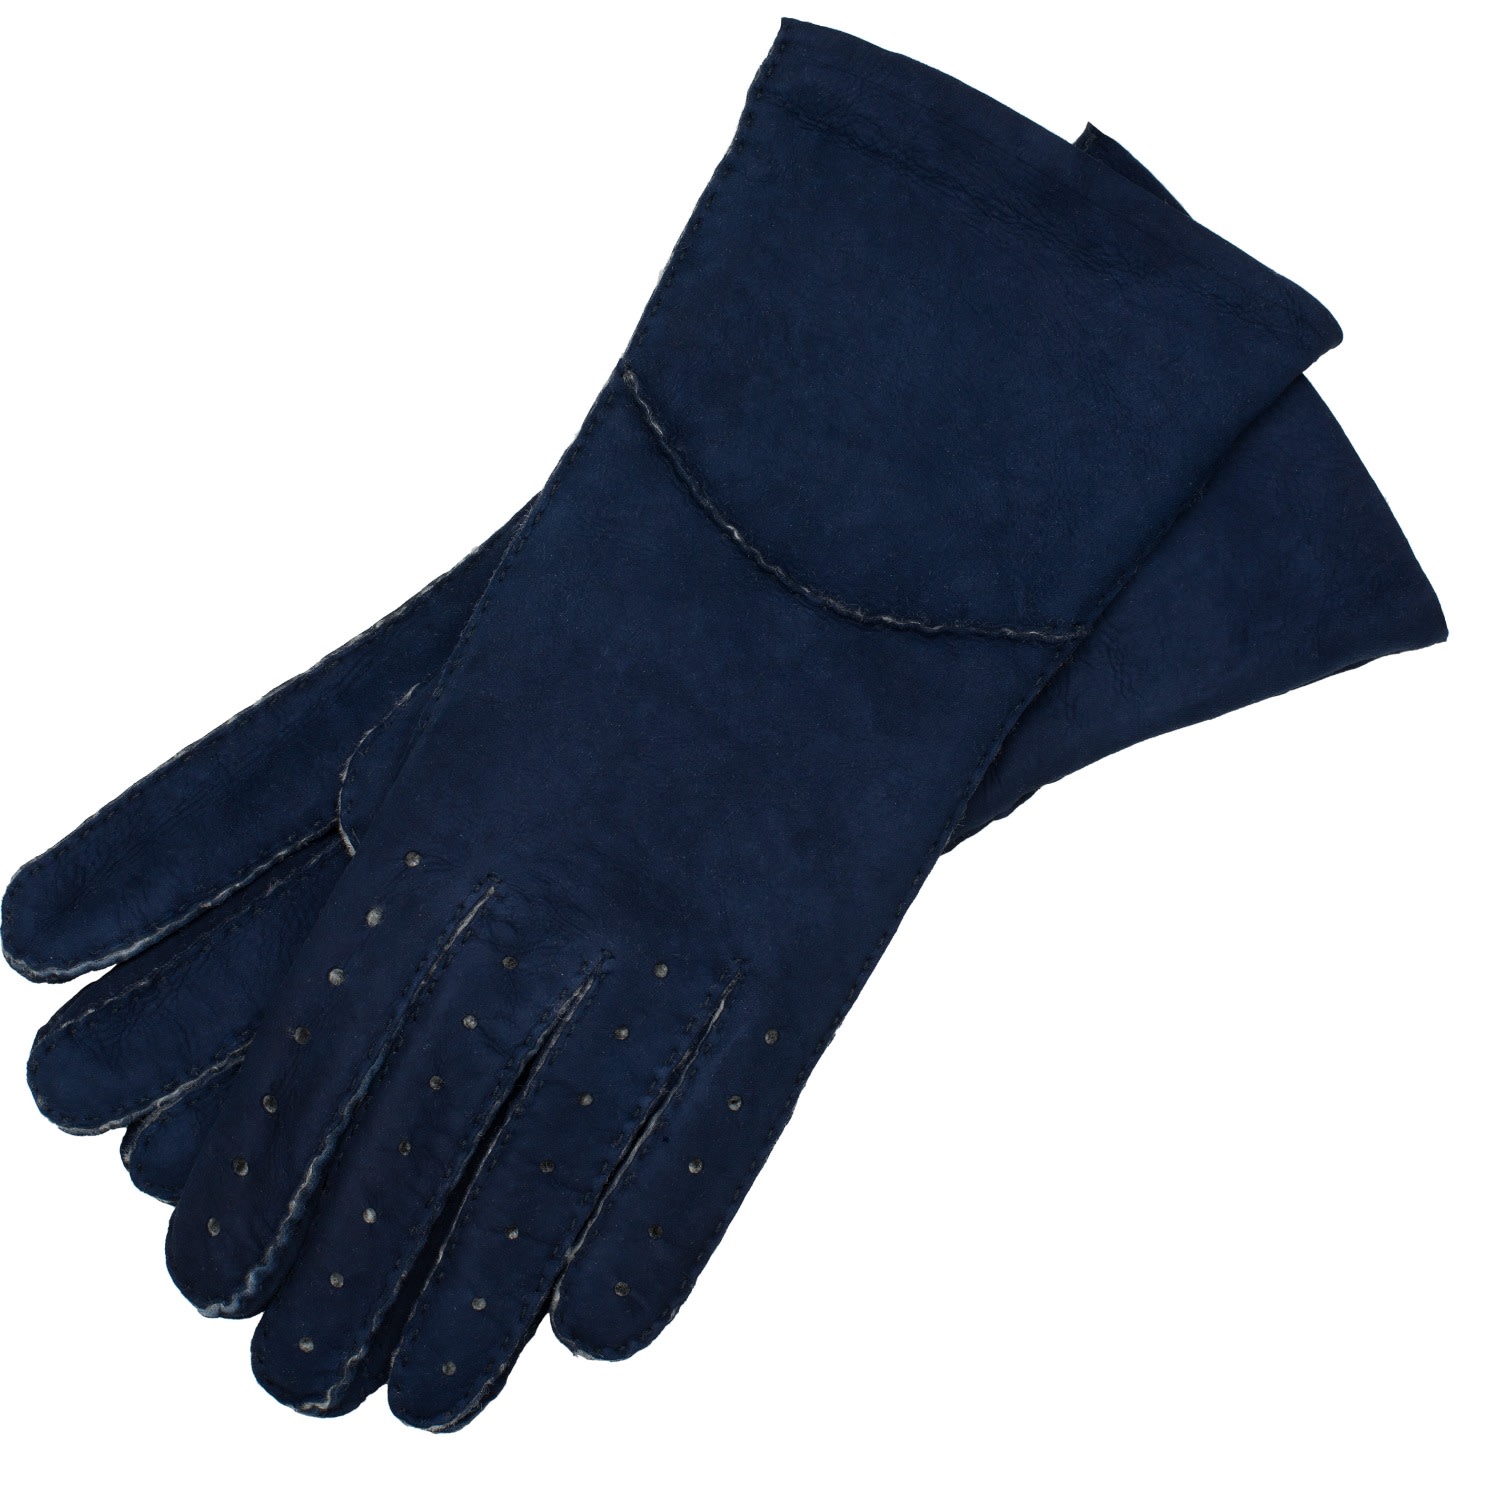 Sella Nevea - Women’s Shearling Gloves In Navy Blue Sheepskin Leather 6.5" 1861 Glove Manufactory